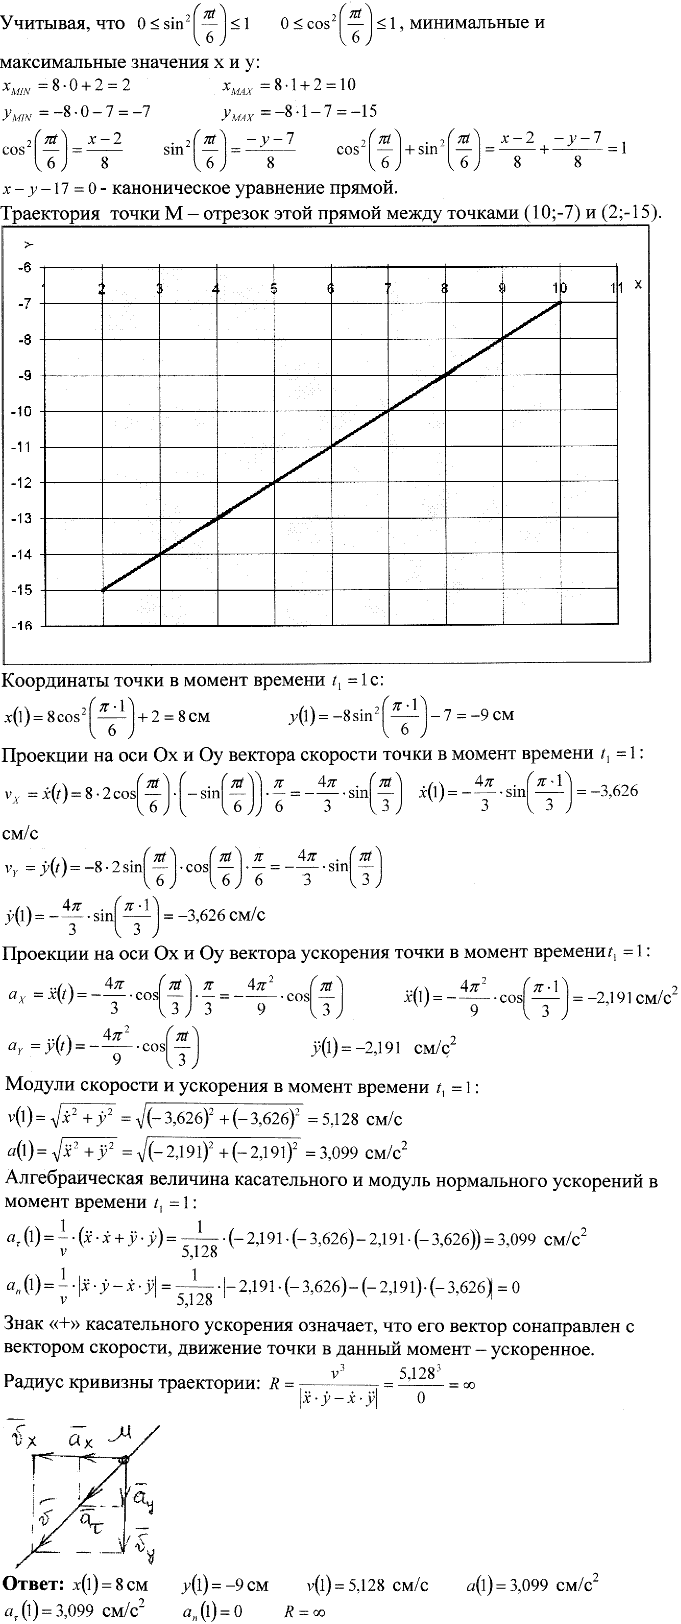 Задание К.1 вариант 26. x t)=8cos^2 (πt/6)+2, y(t)=-8sin2 (πt/6 -7, t1=1 с